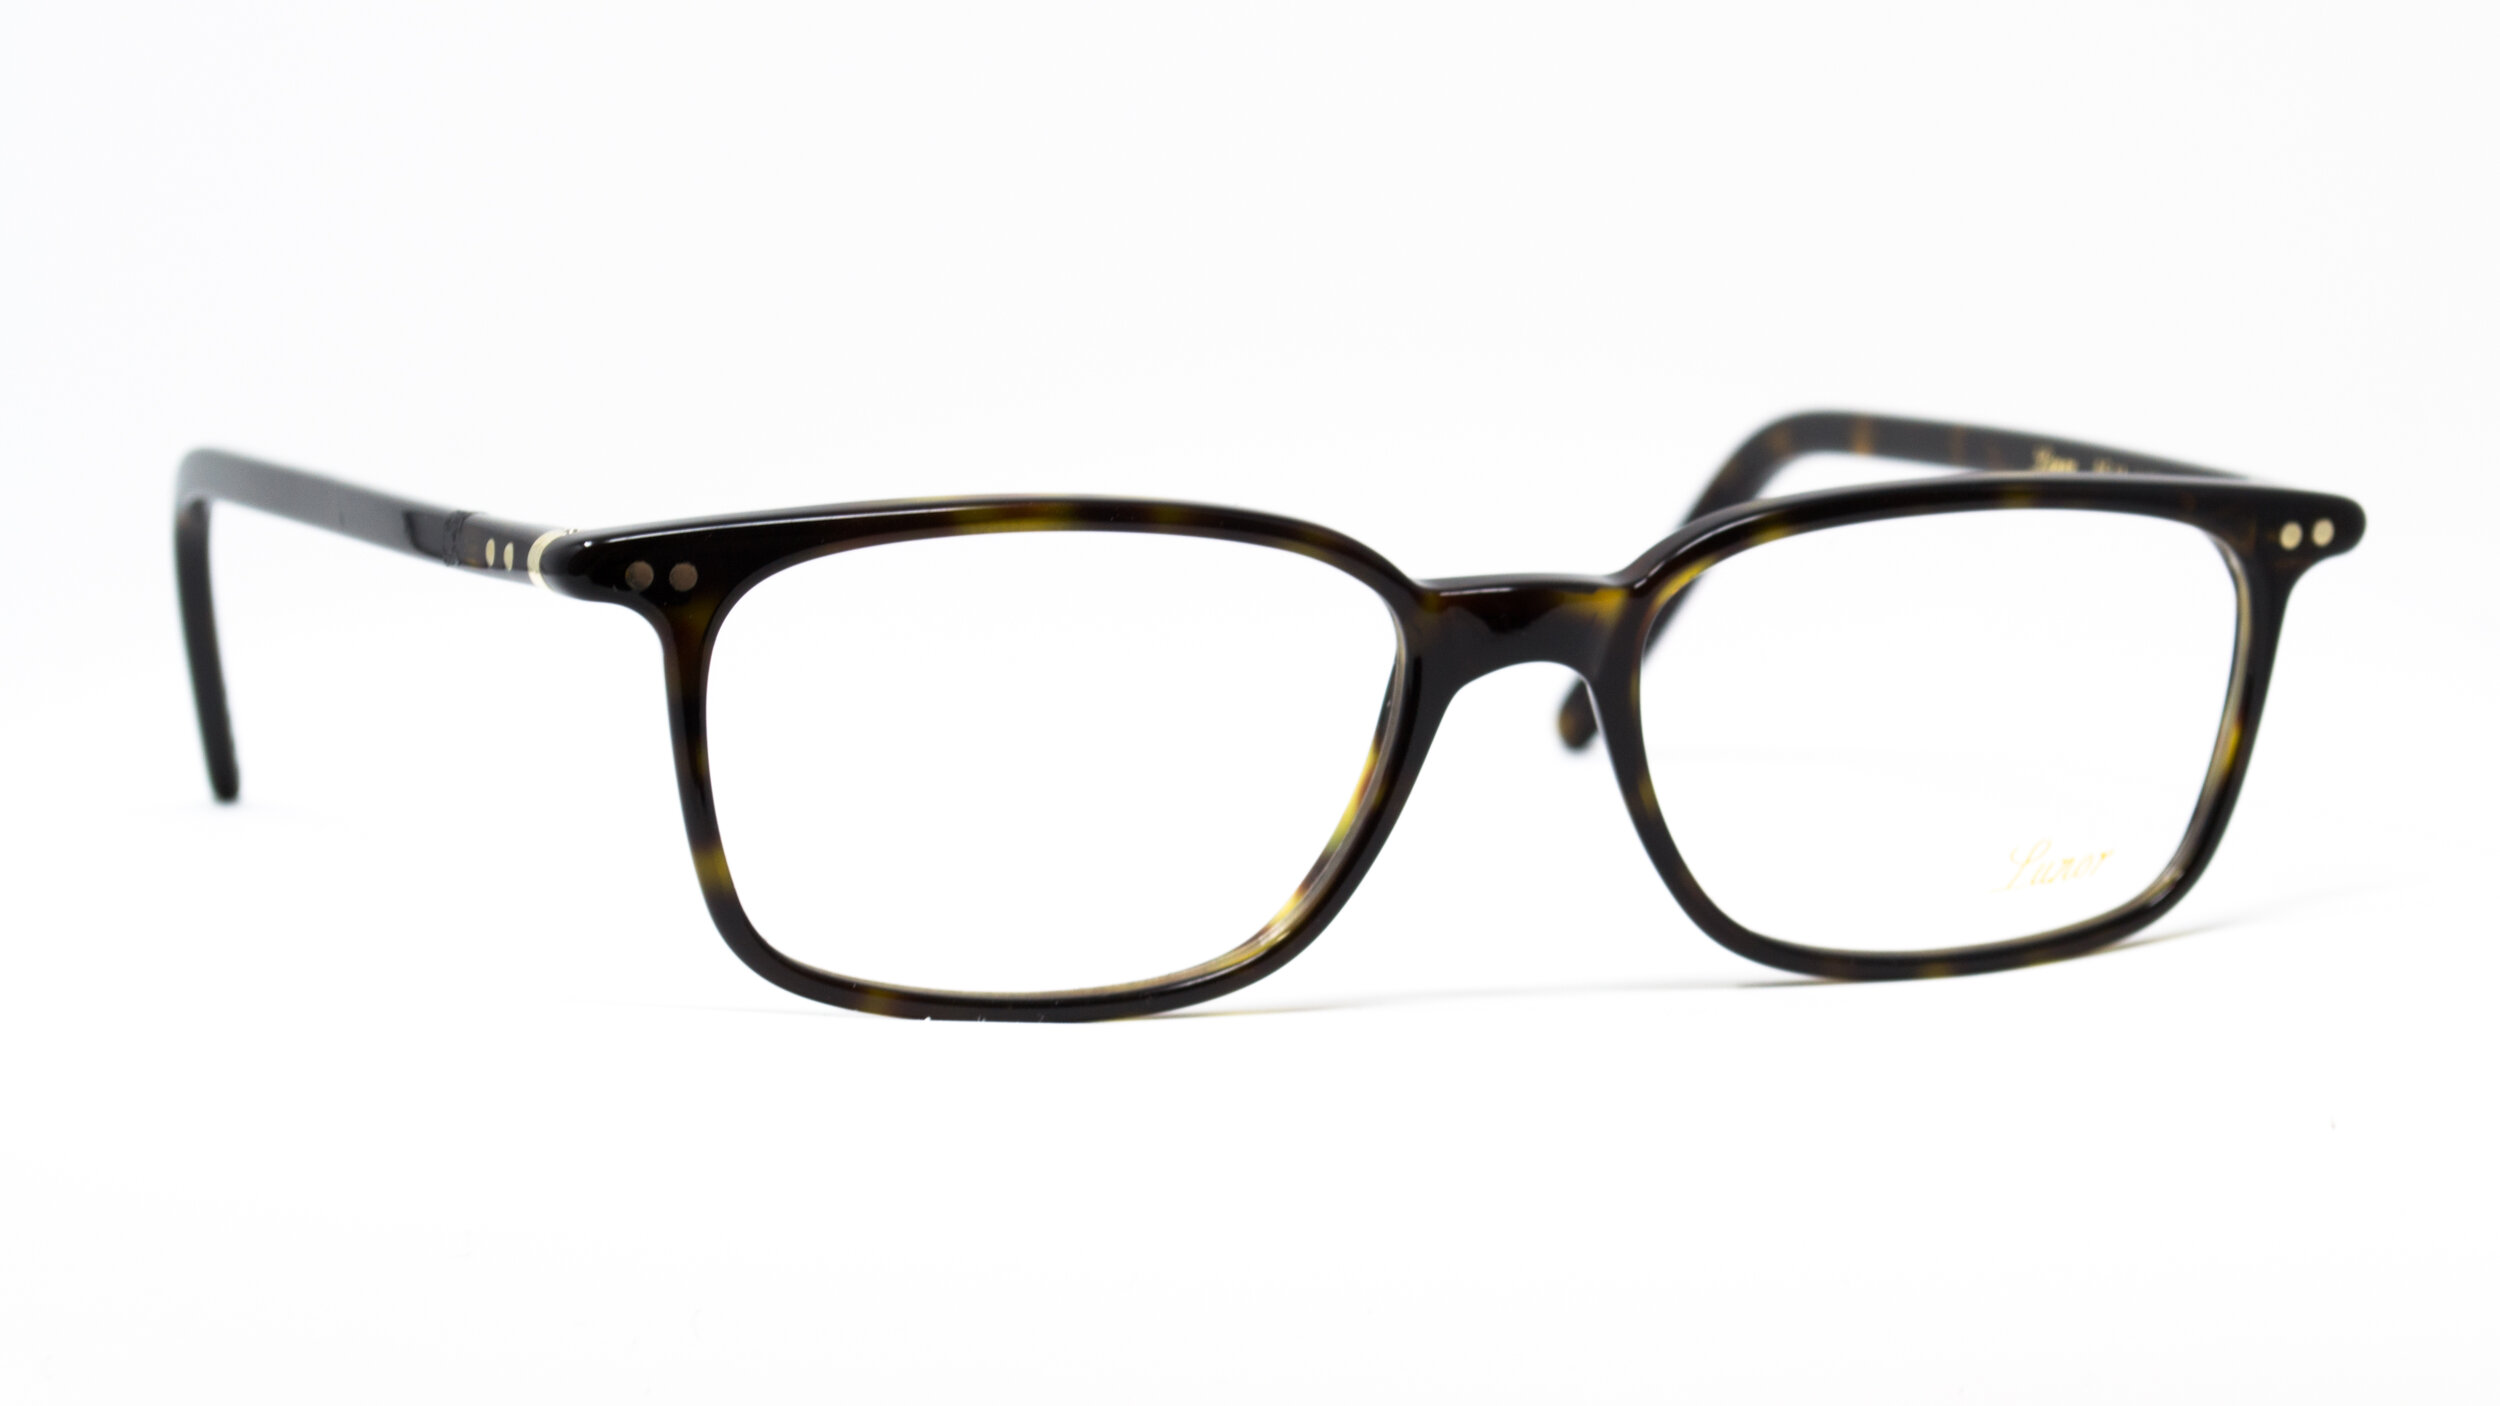 Lunor A5 601 | Buy Designer Glasses Online | Advanced Vision Eyewear ...